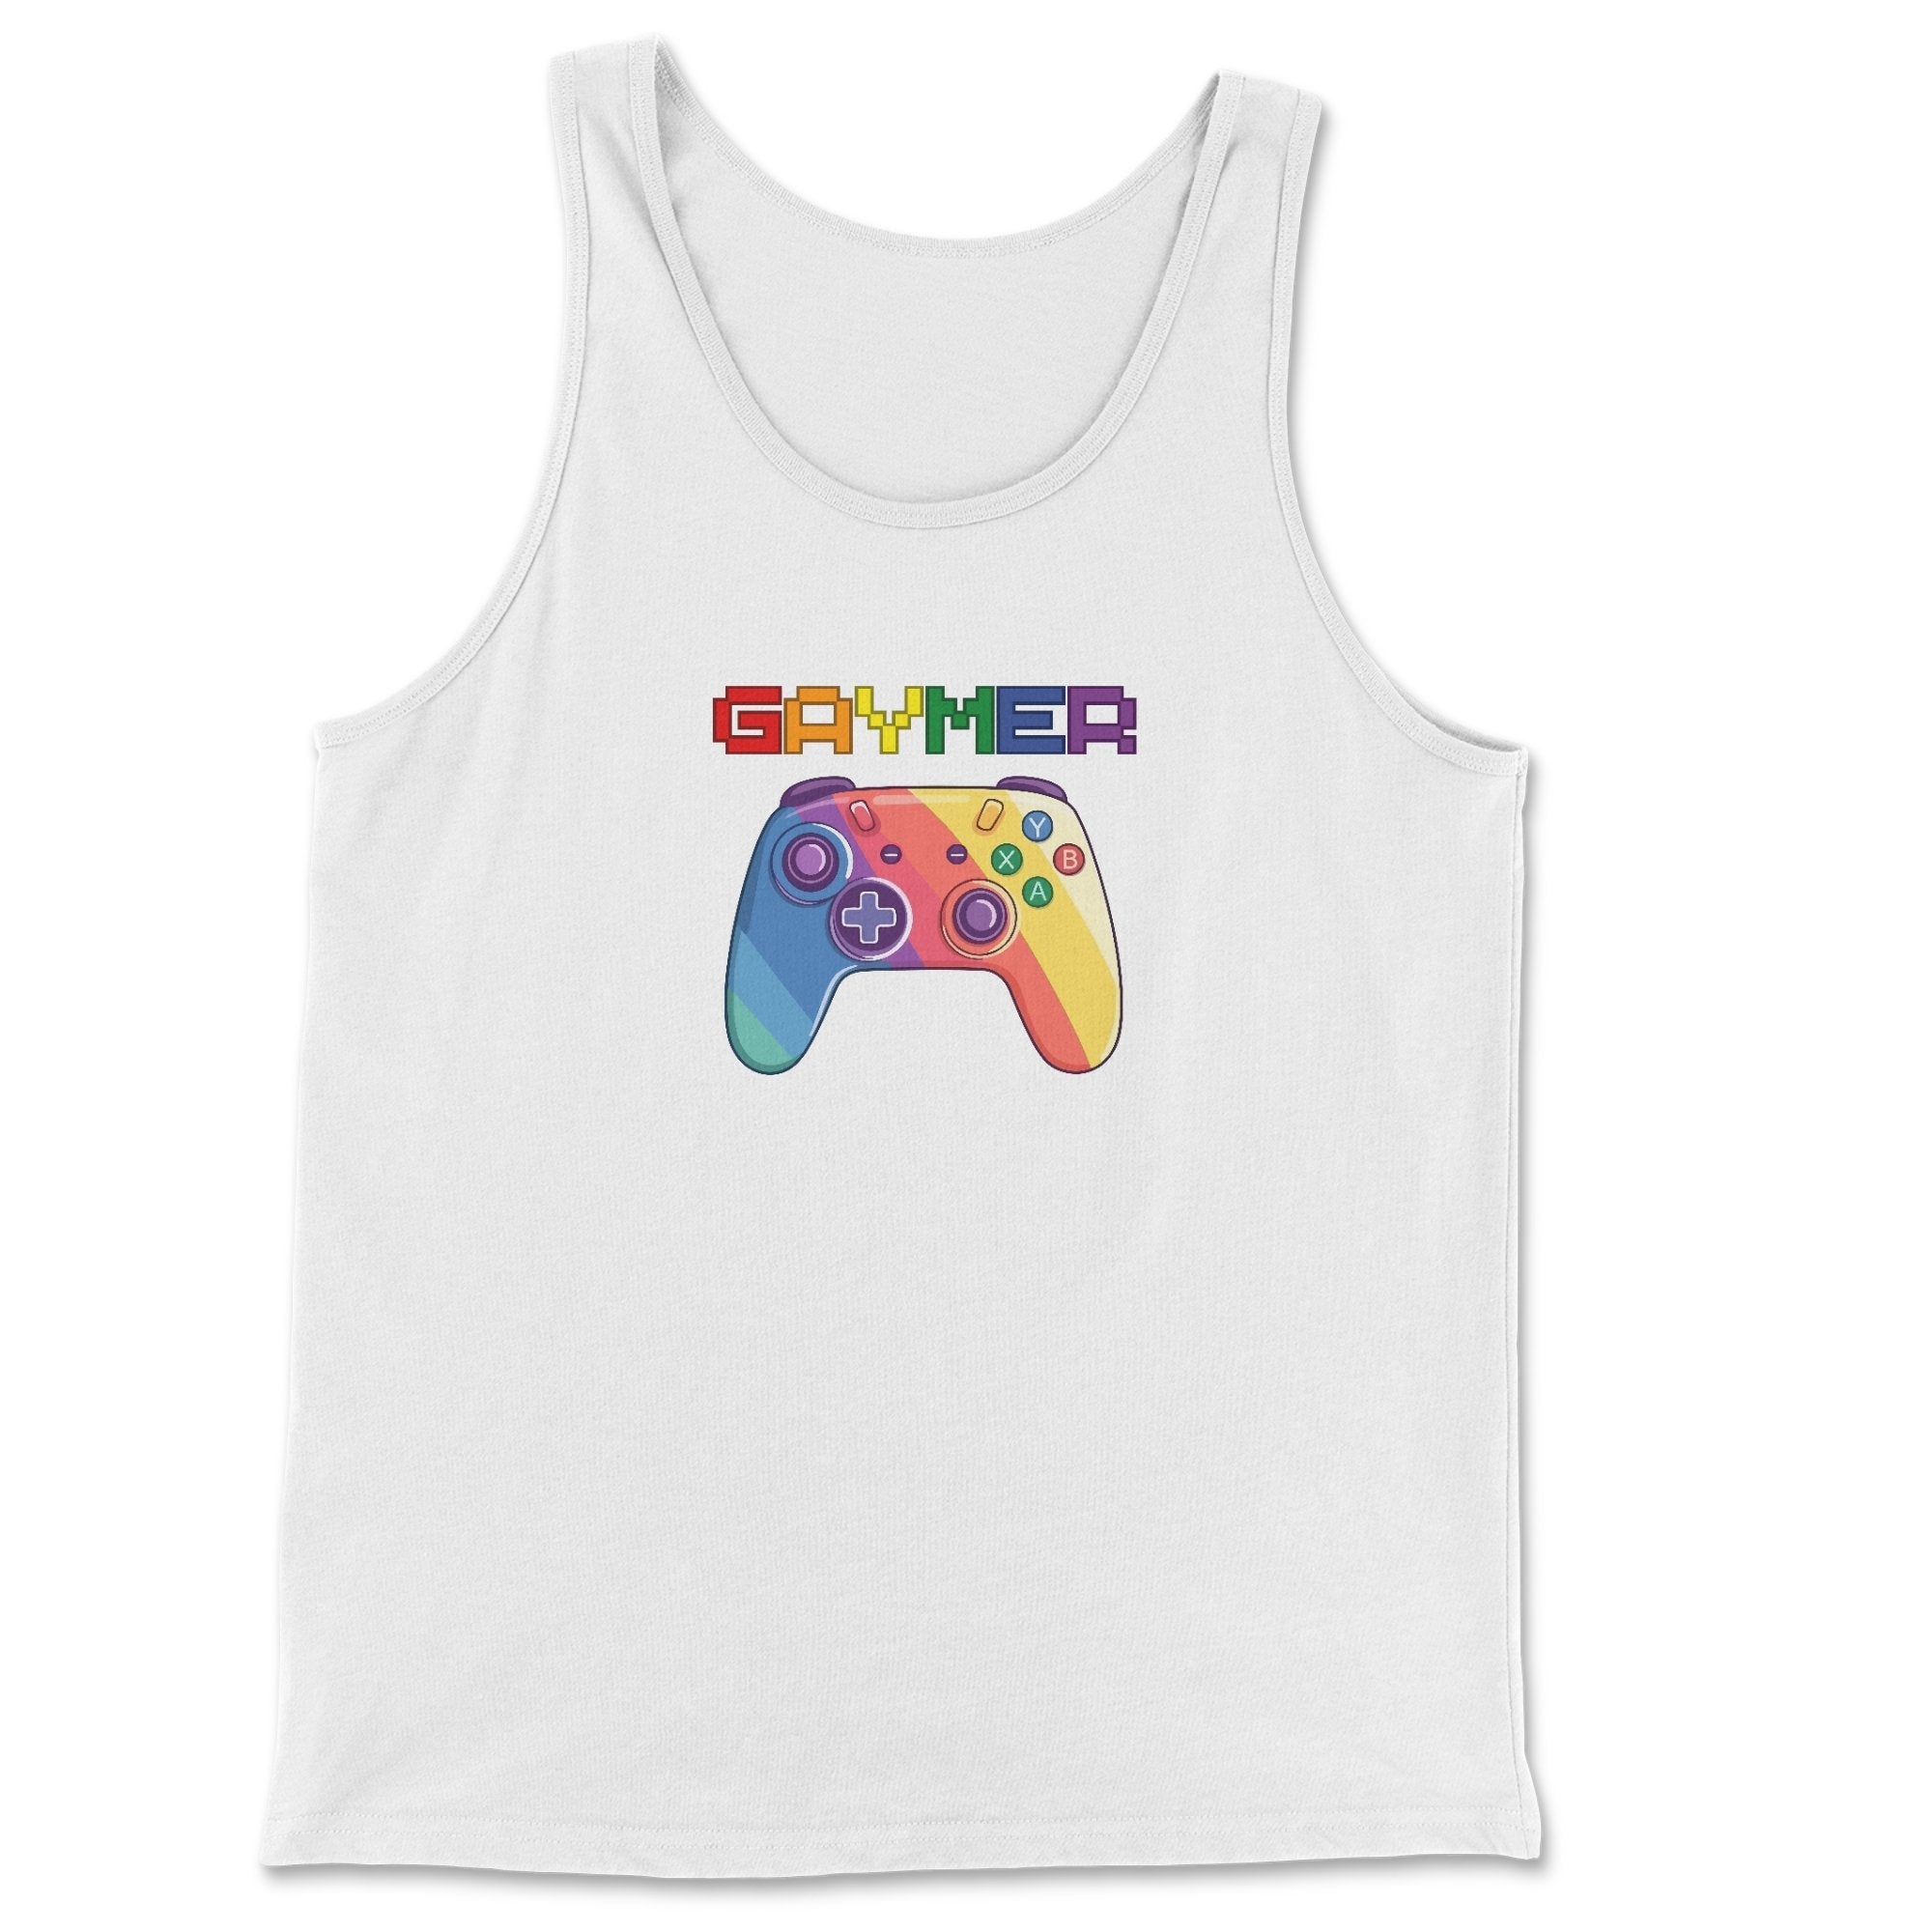 GAYMER Tank Top - LGBTQ+ Gamer Pride - Hunky Tops